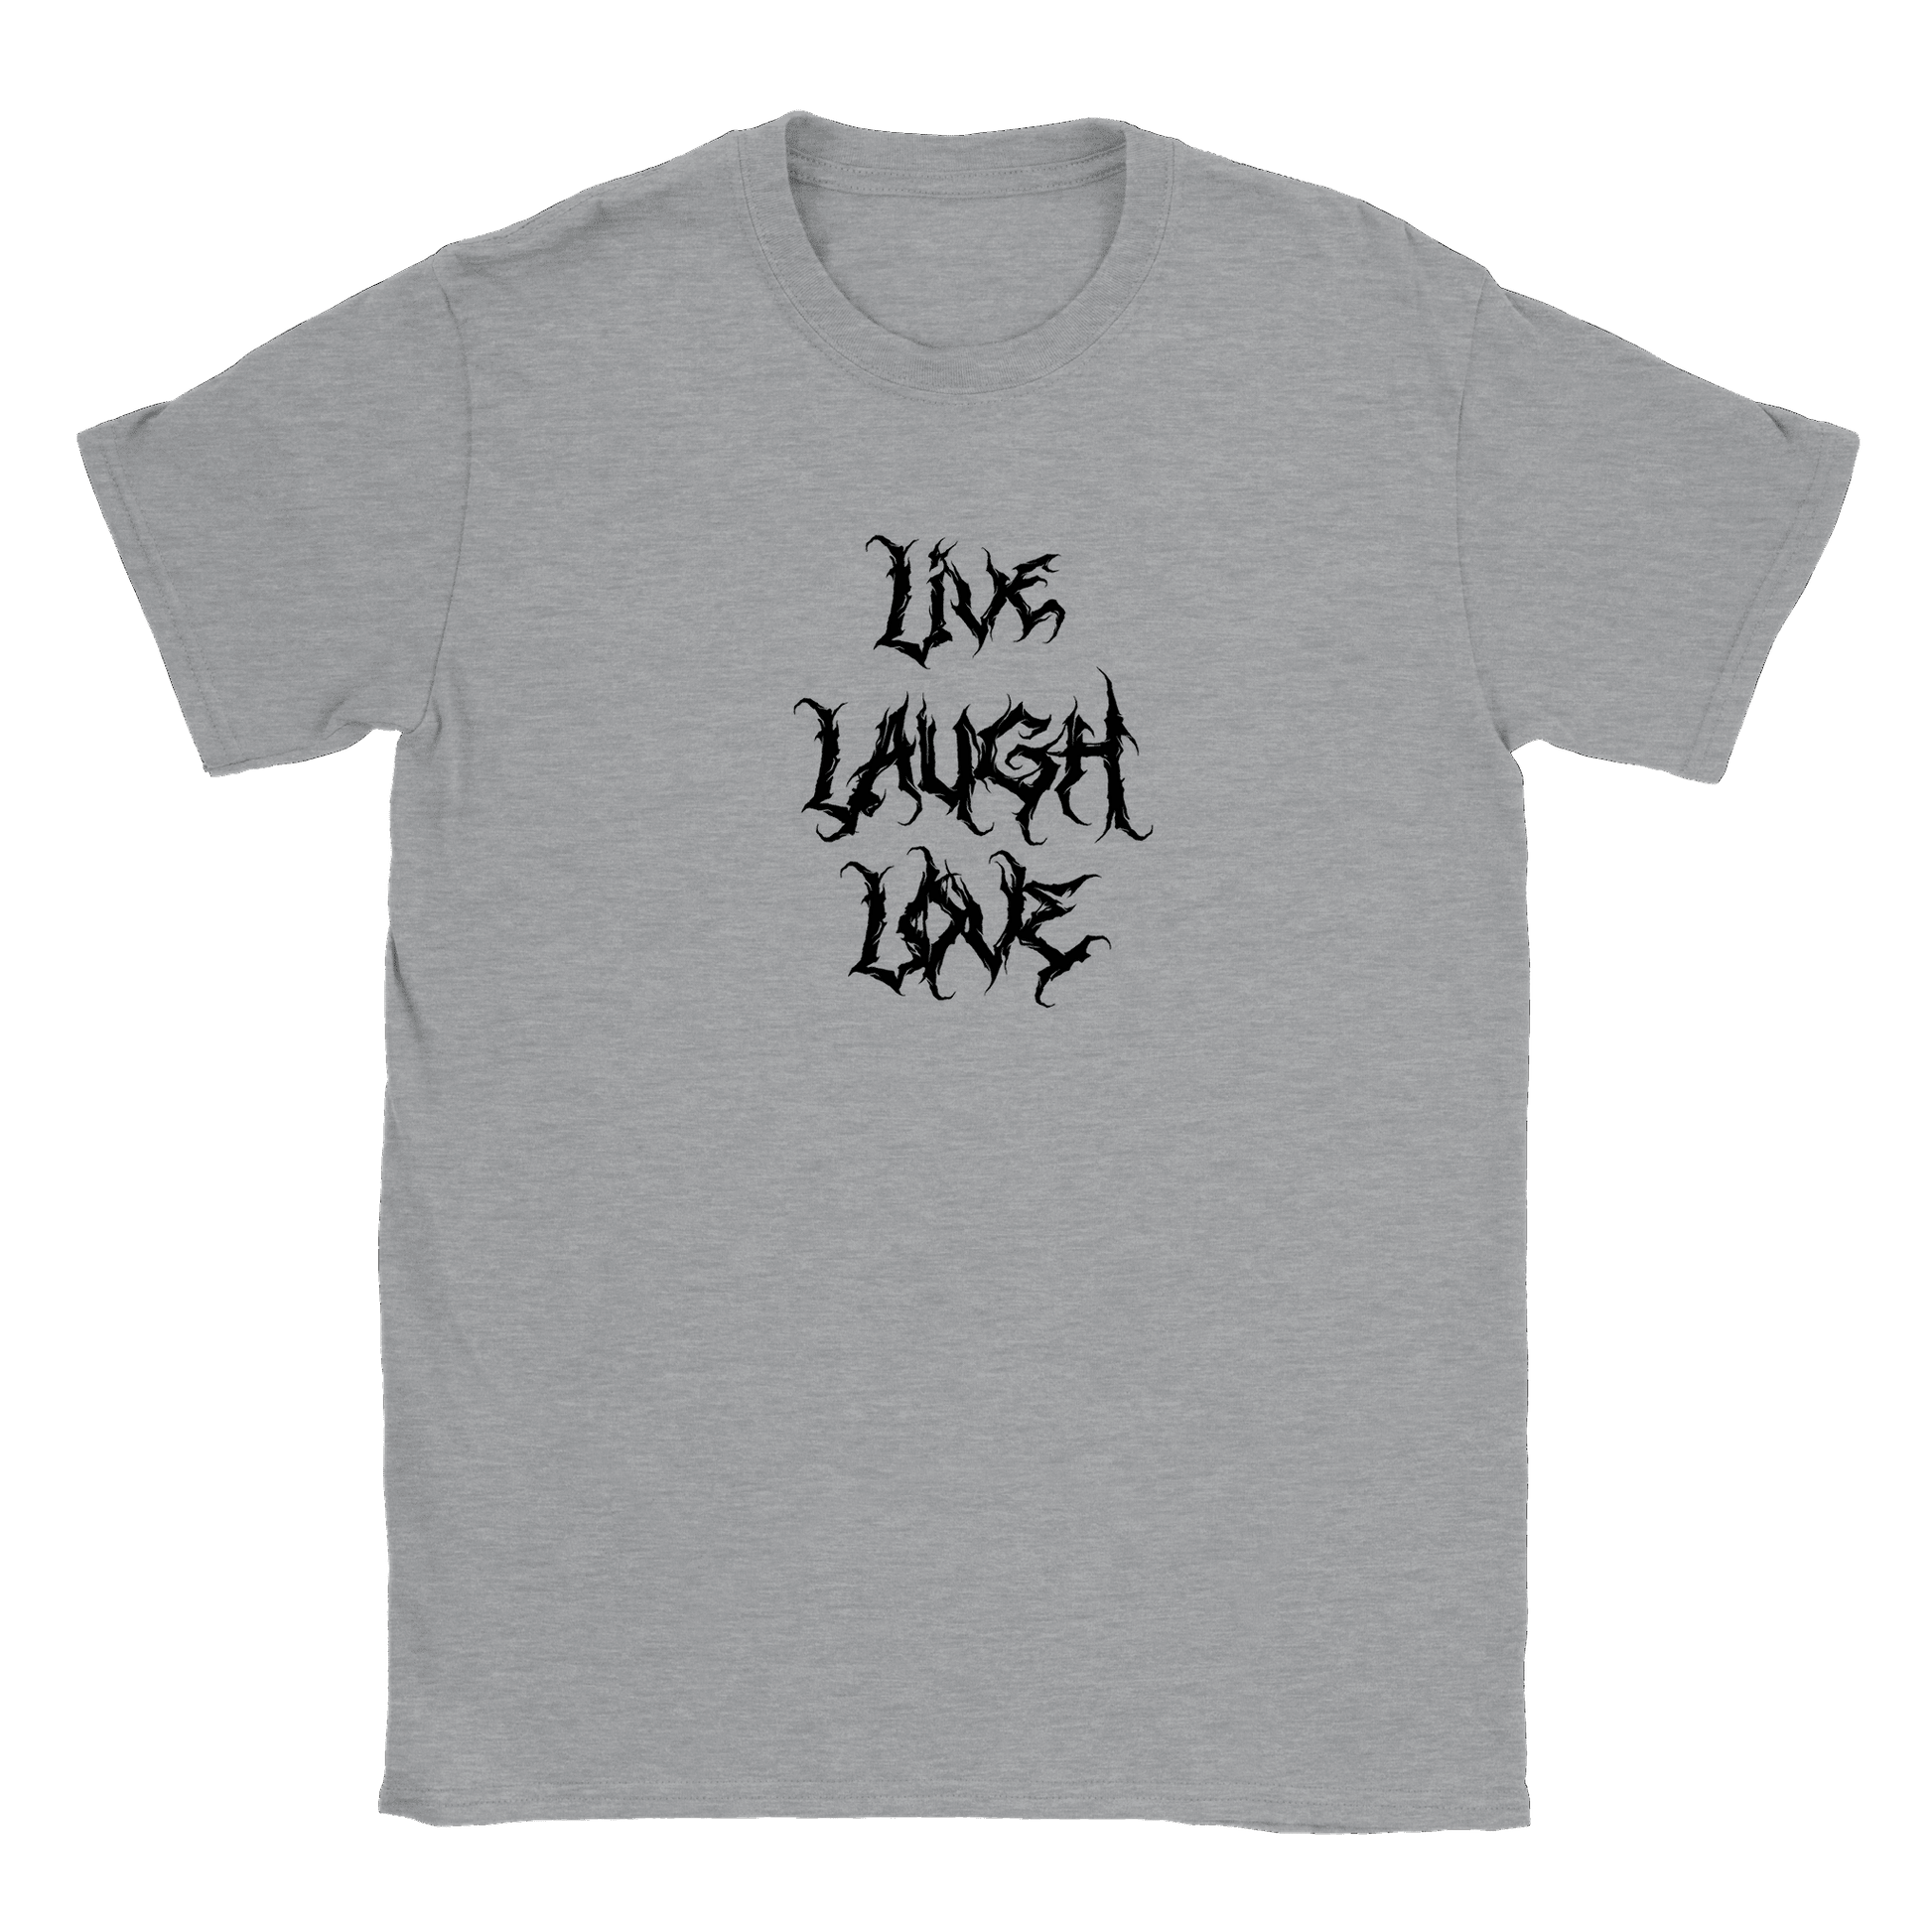 Live Laugh Love - T-shirt Sports Grey